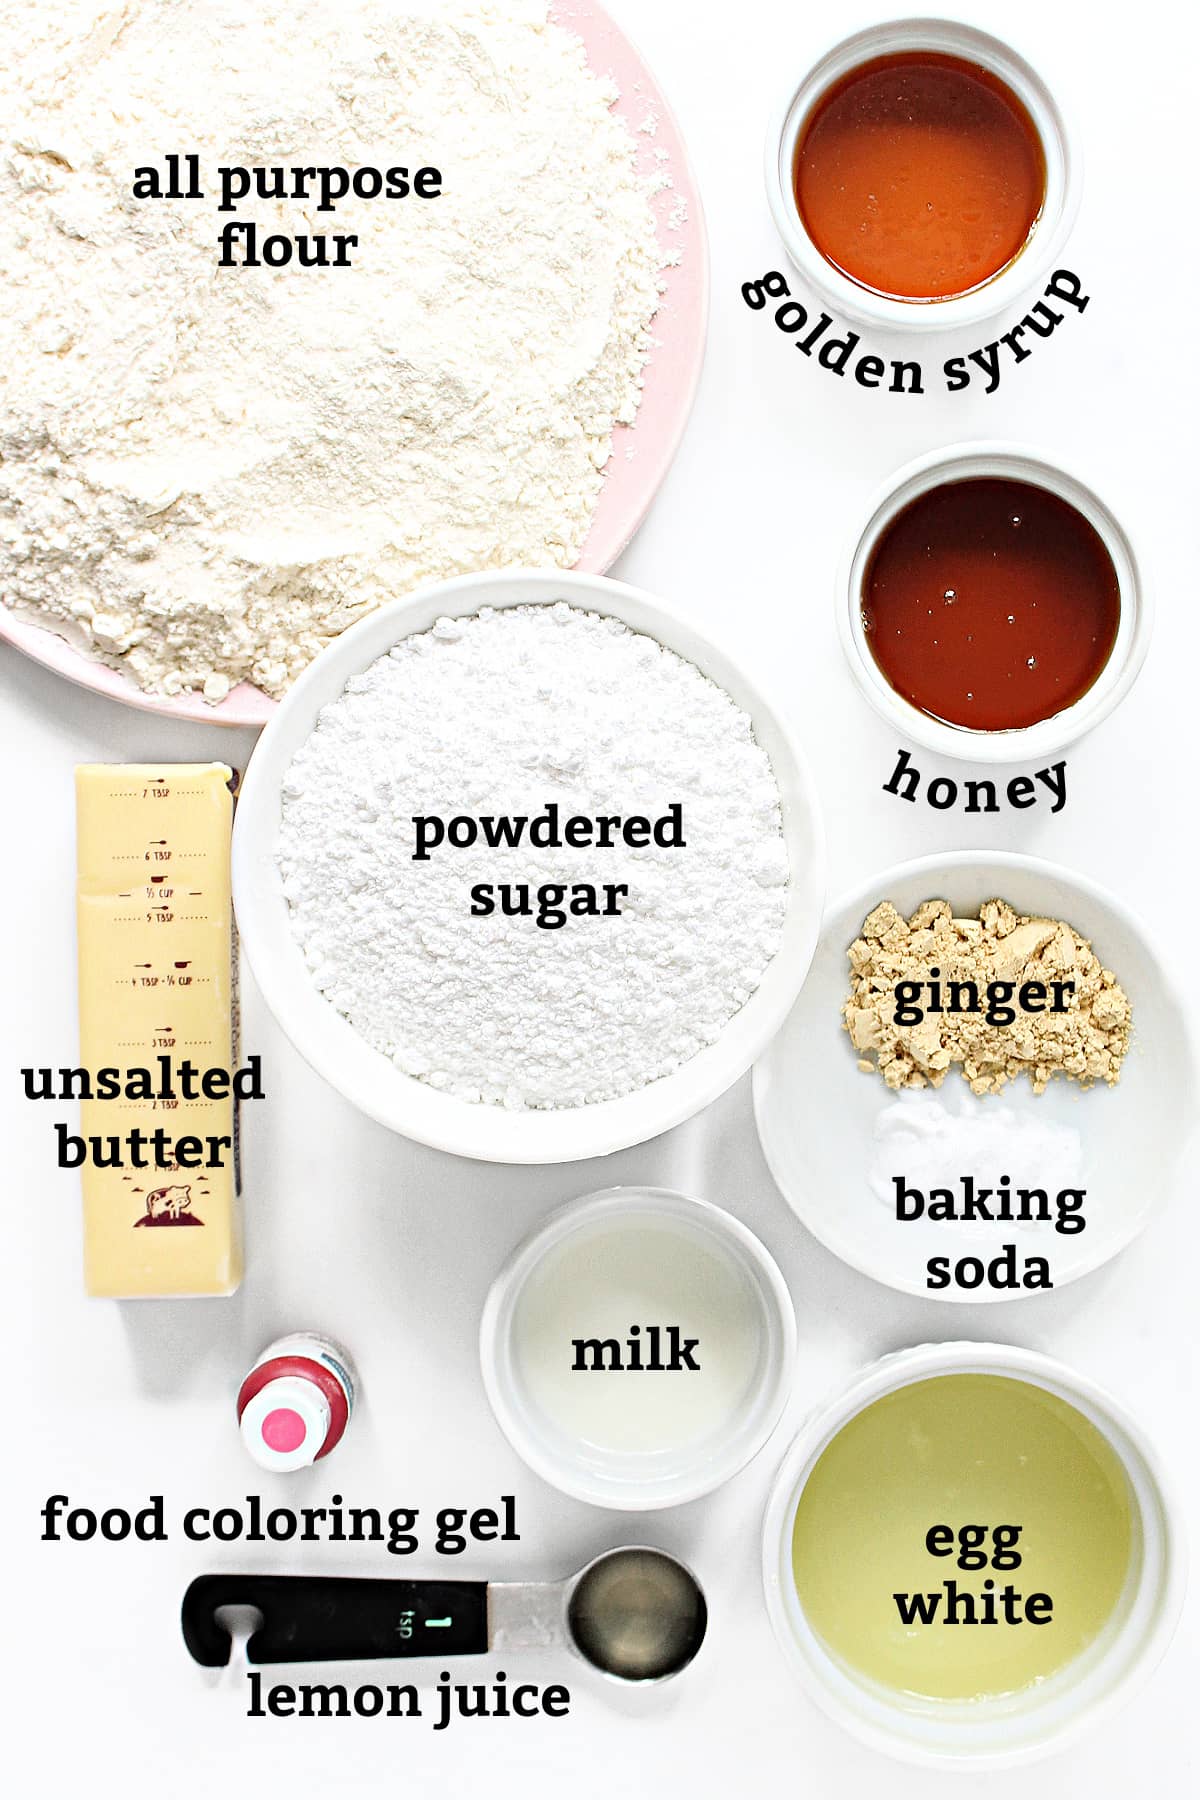 Ingredients: flour, golden syrup, honey, powdered sugar, butter, ginger, baking soda, milk, egg white, lemon juice, food coloring.